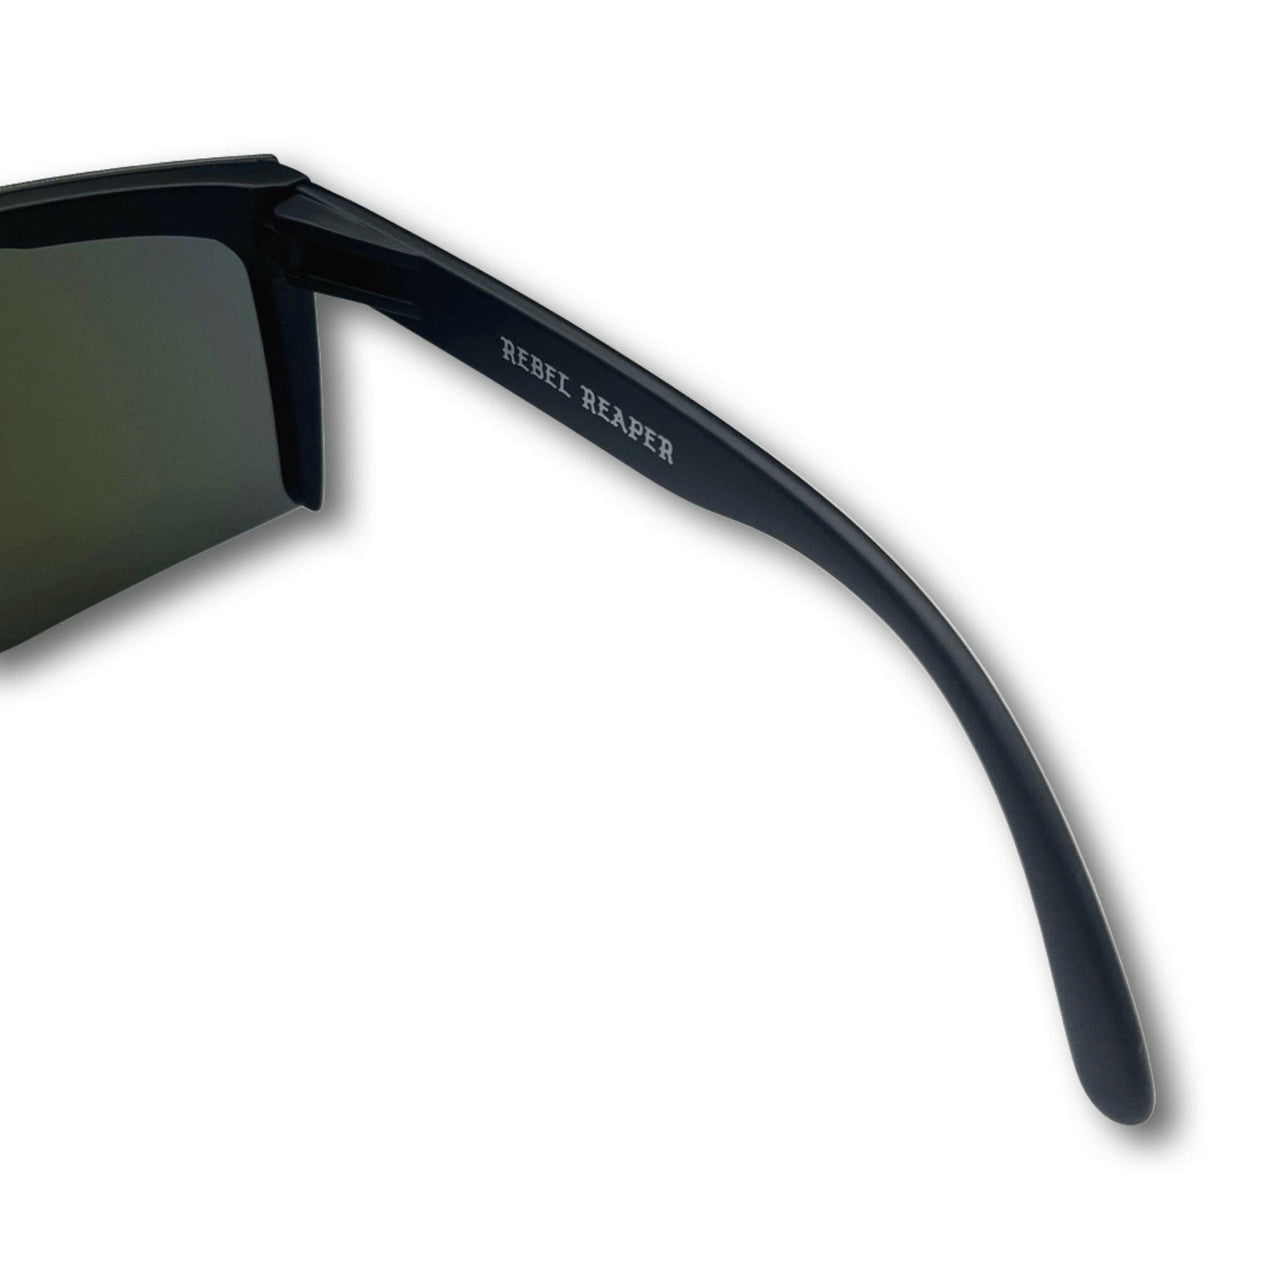 Hogans -Red Mirror Polarized Lens Sunglasses